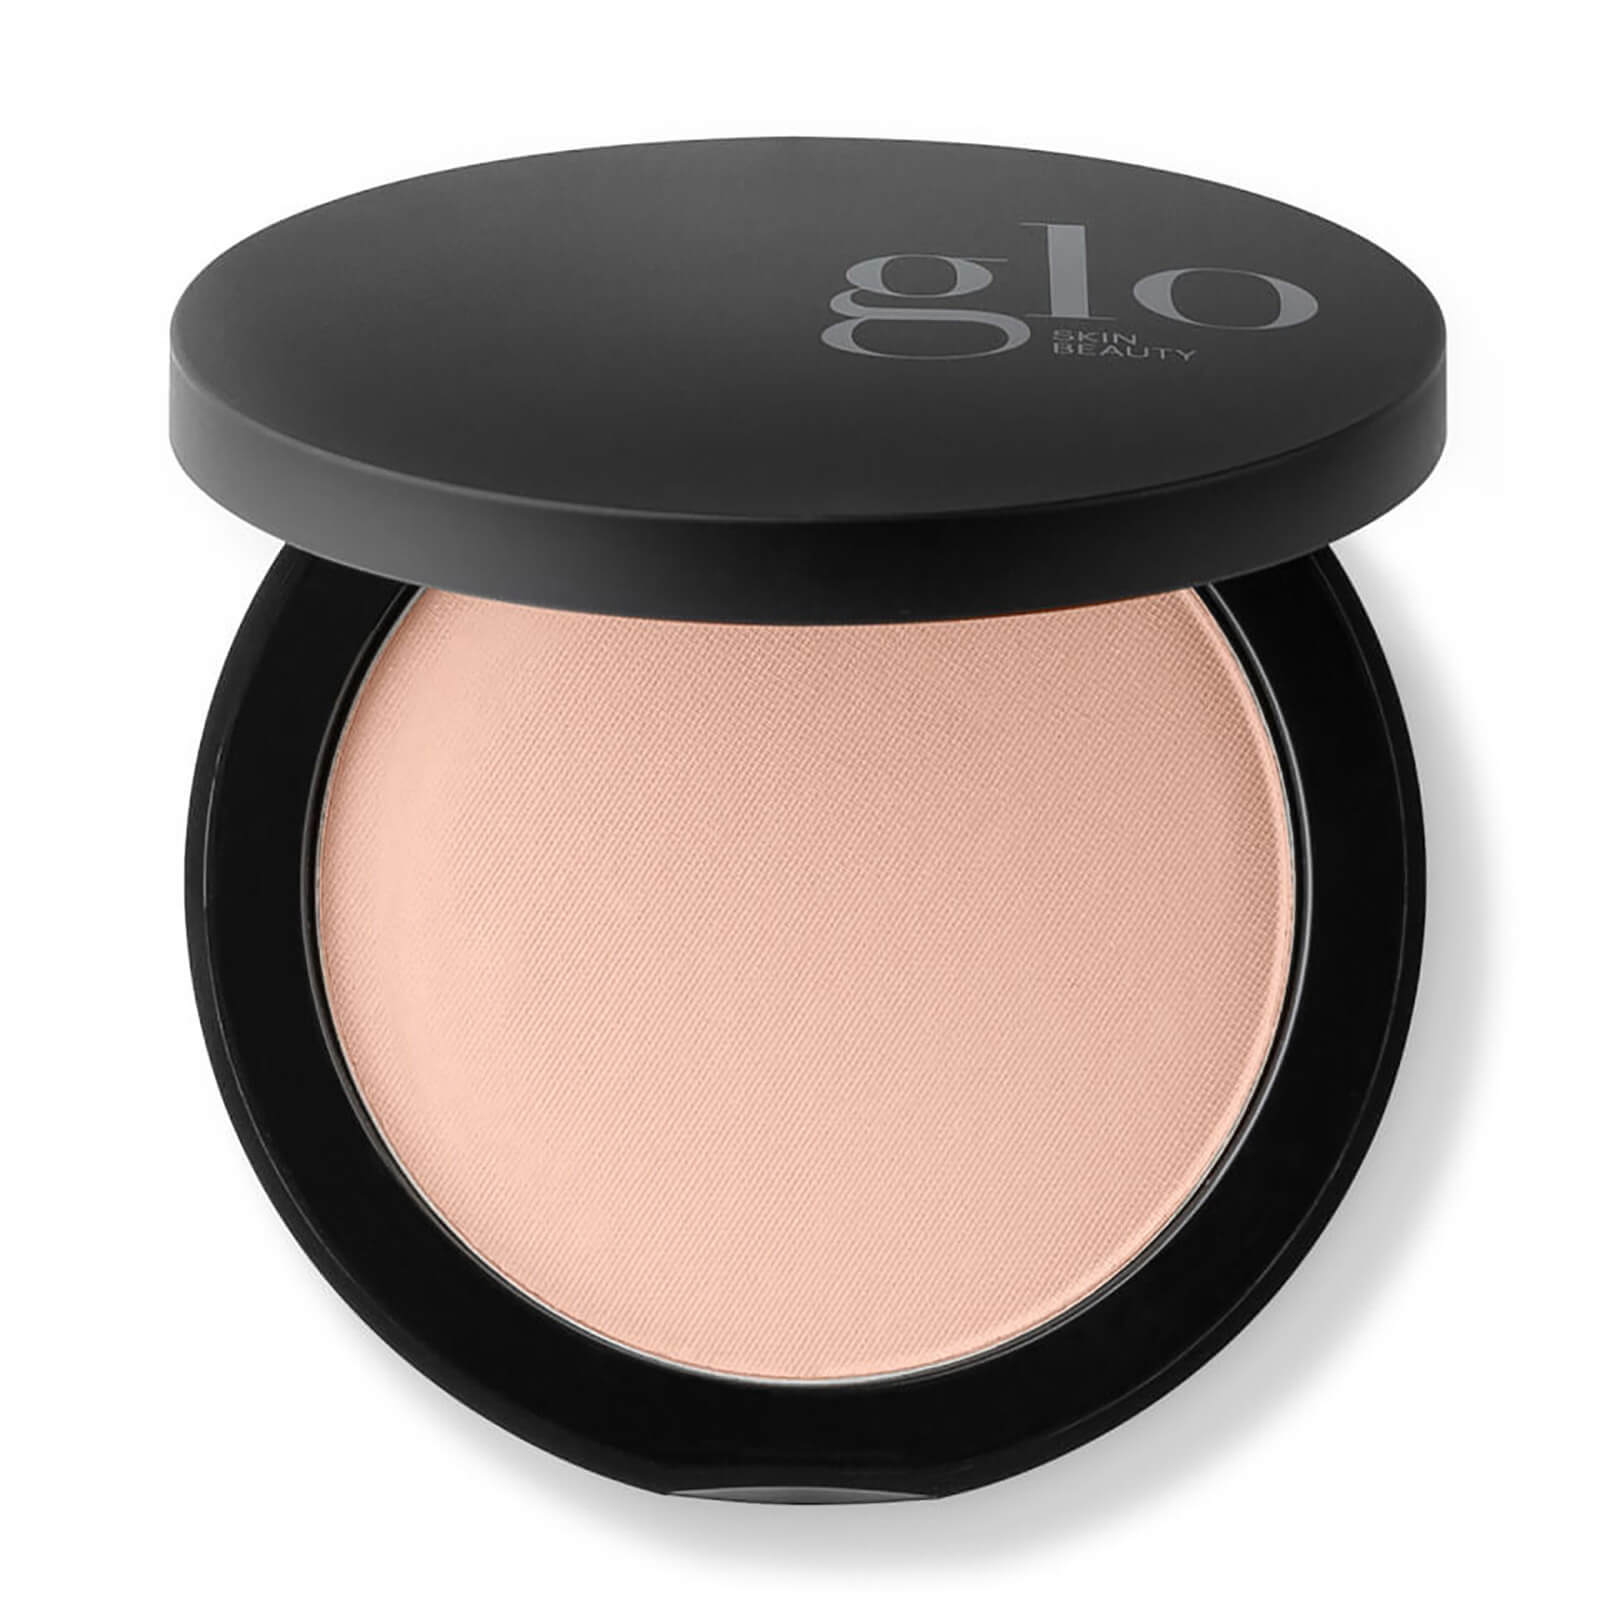 Glo Skin Beauty Pressed Base Powder Foundation (0.35 Oz.) In Beige Dark